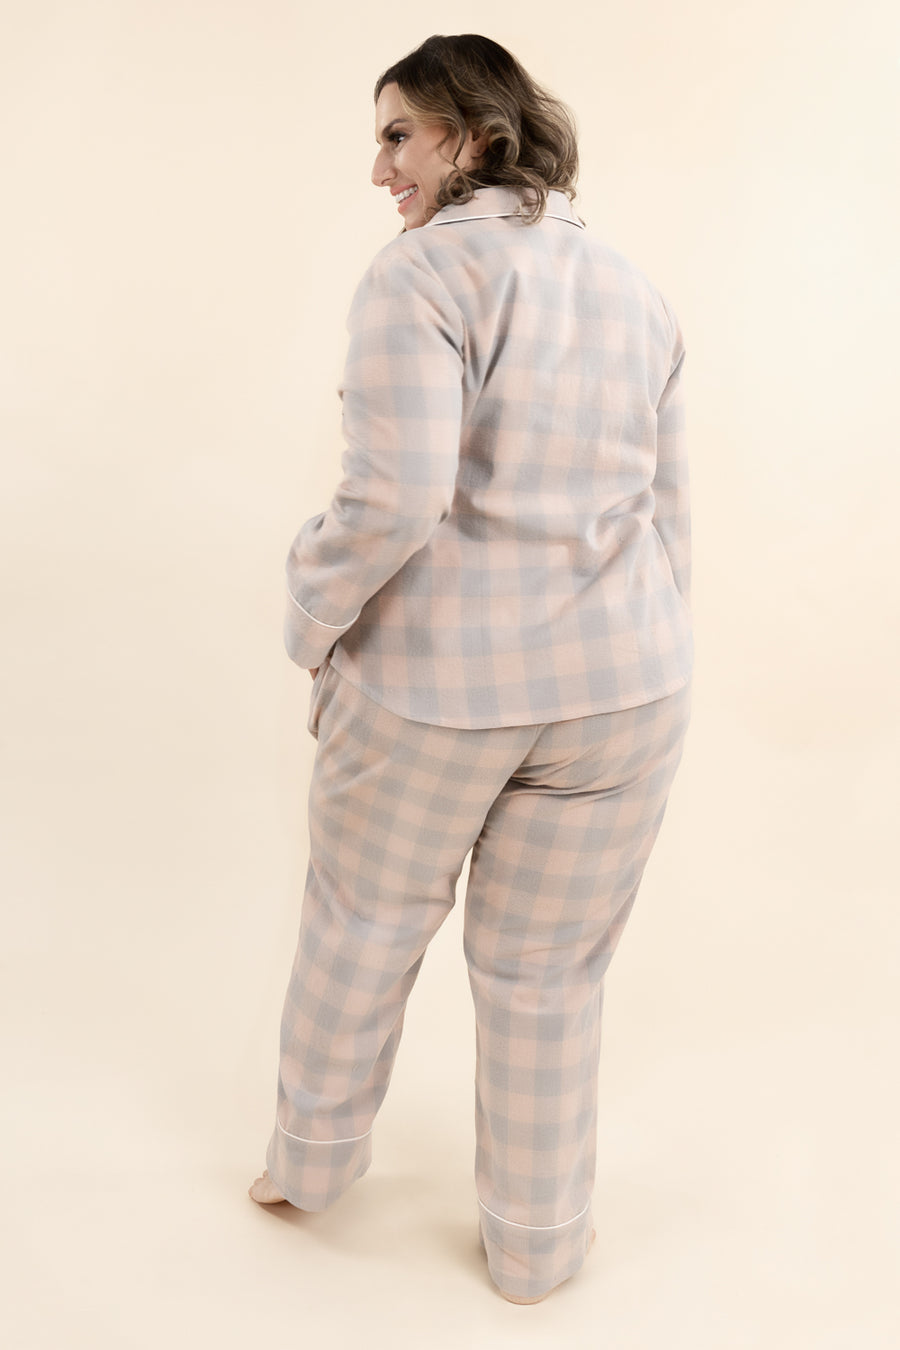 Women's Sleepwear - Shop Quality Pyjamas At Sussan